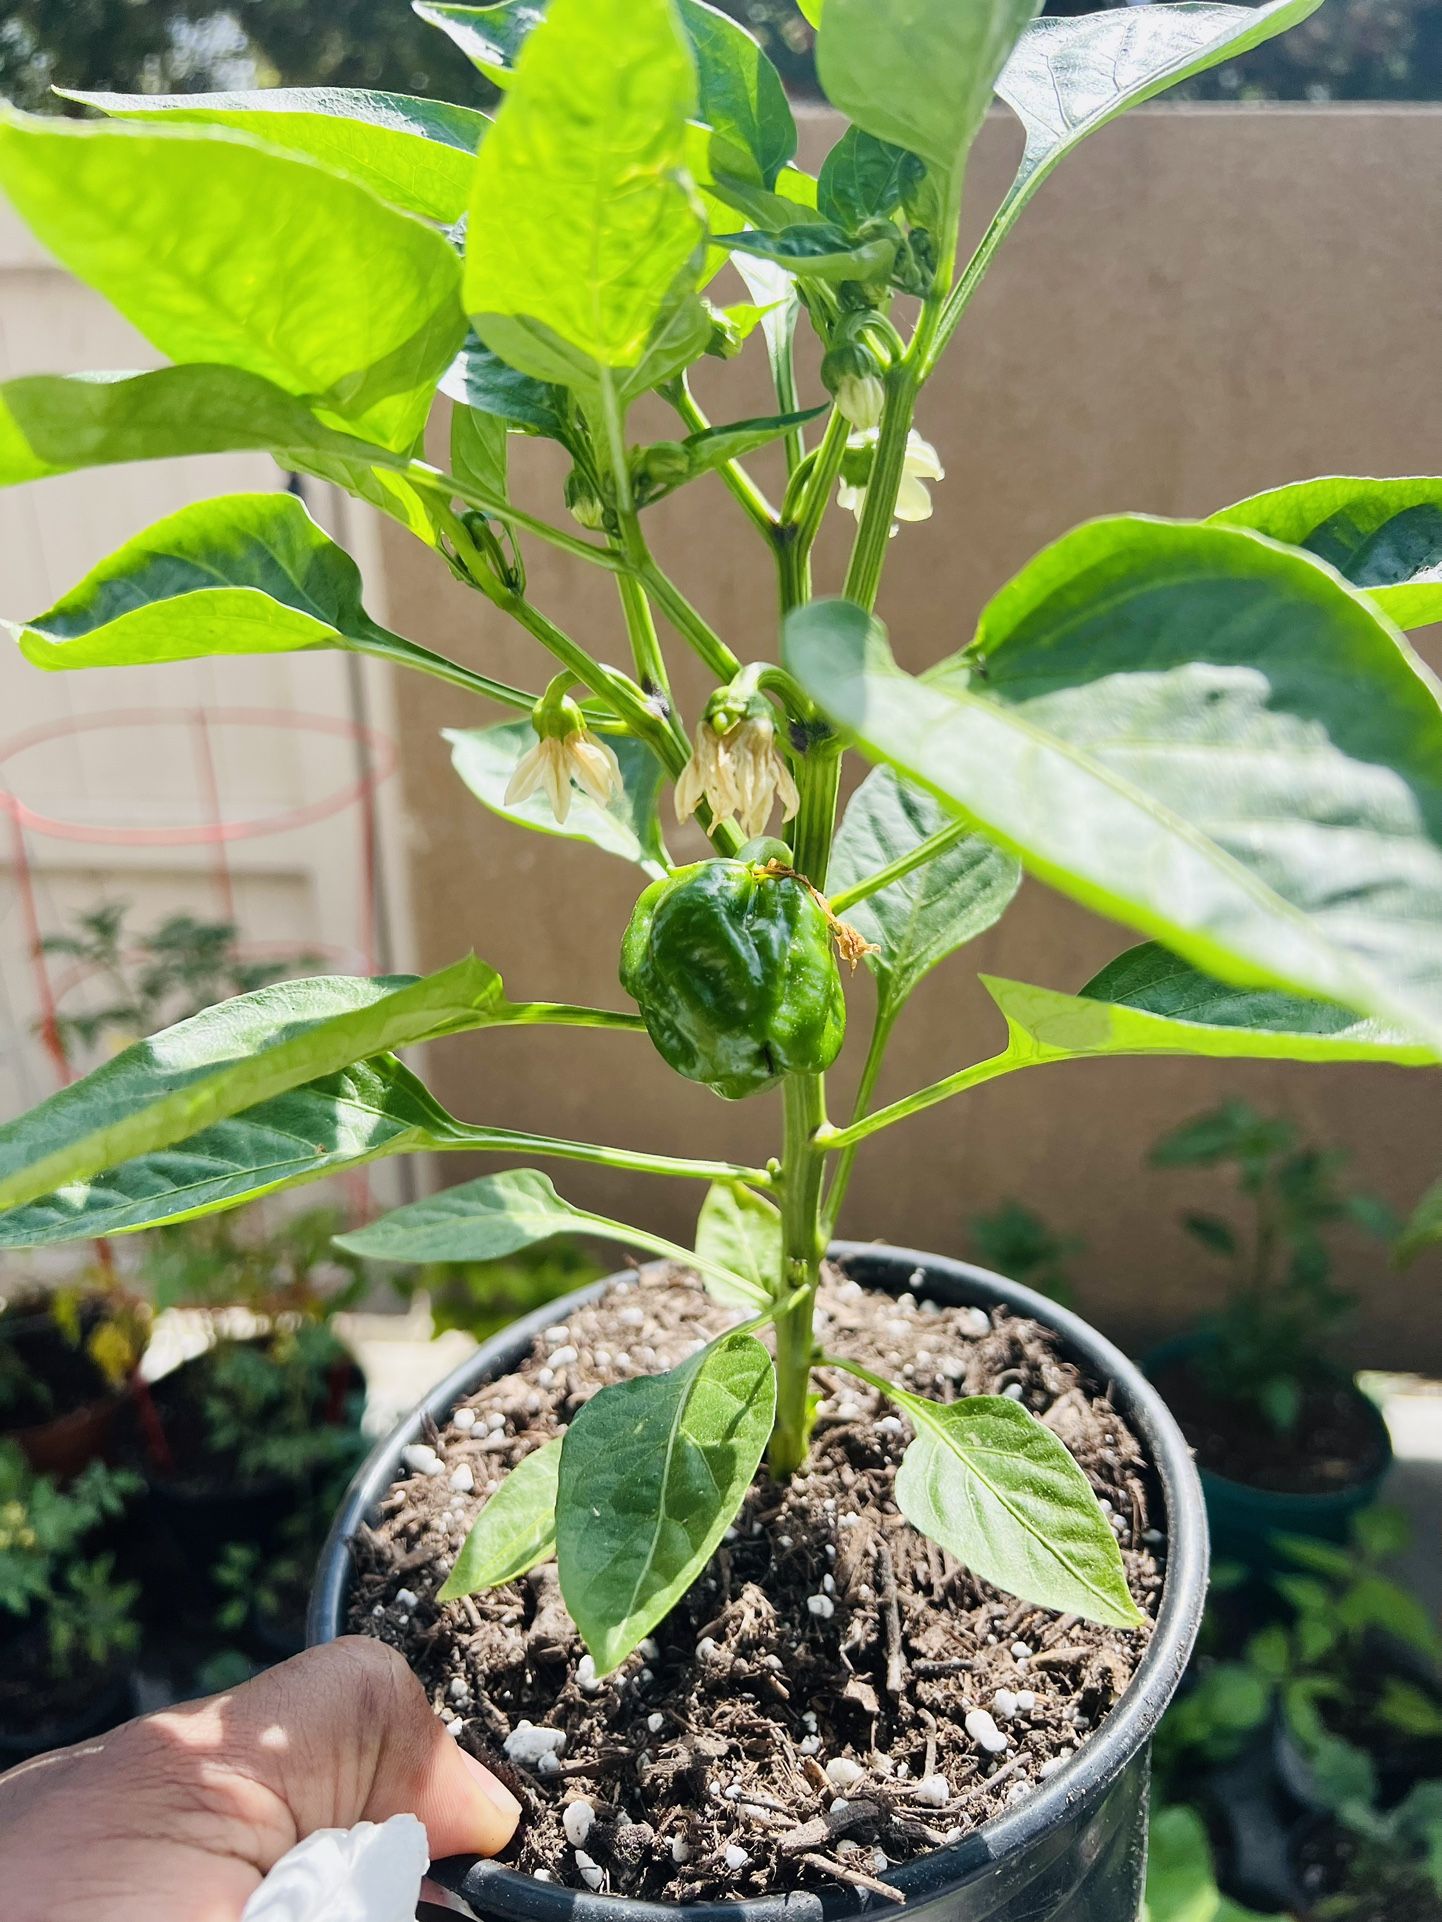 Pepper Plant “California Wonder”